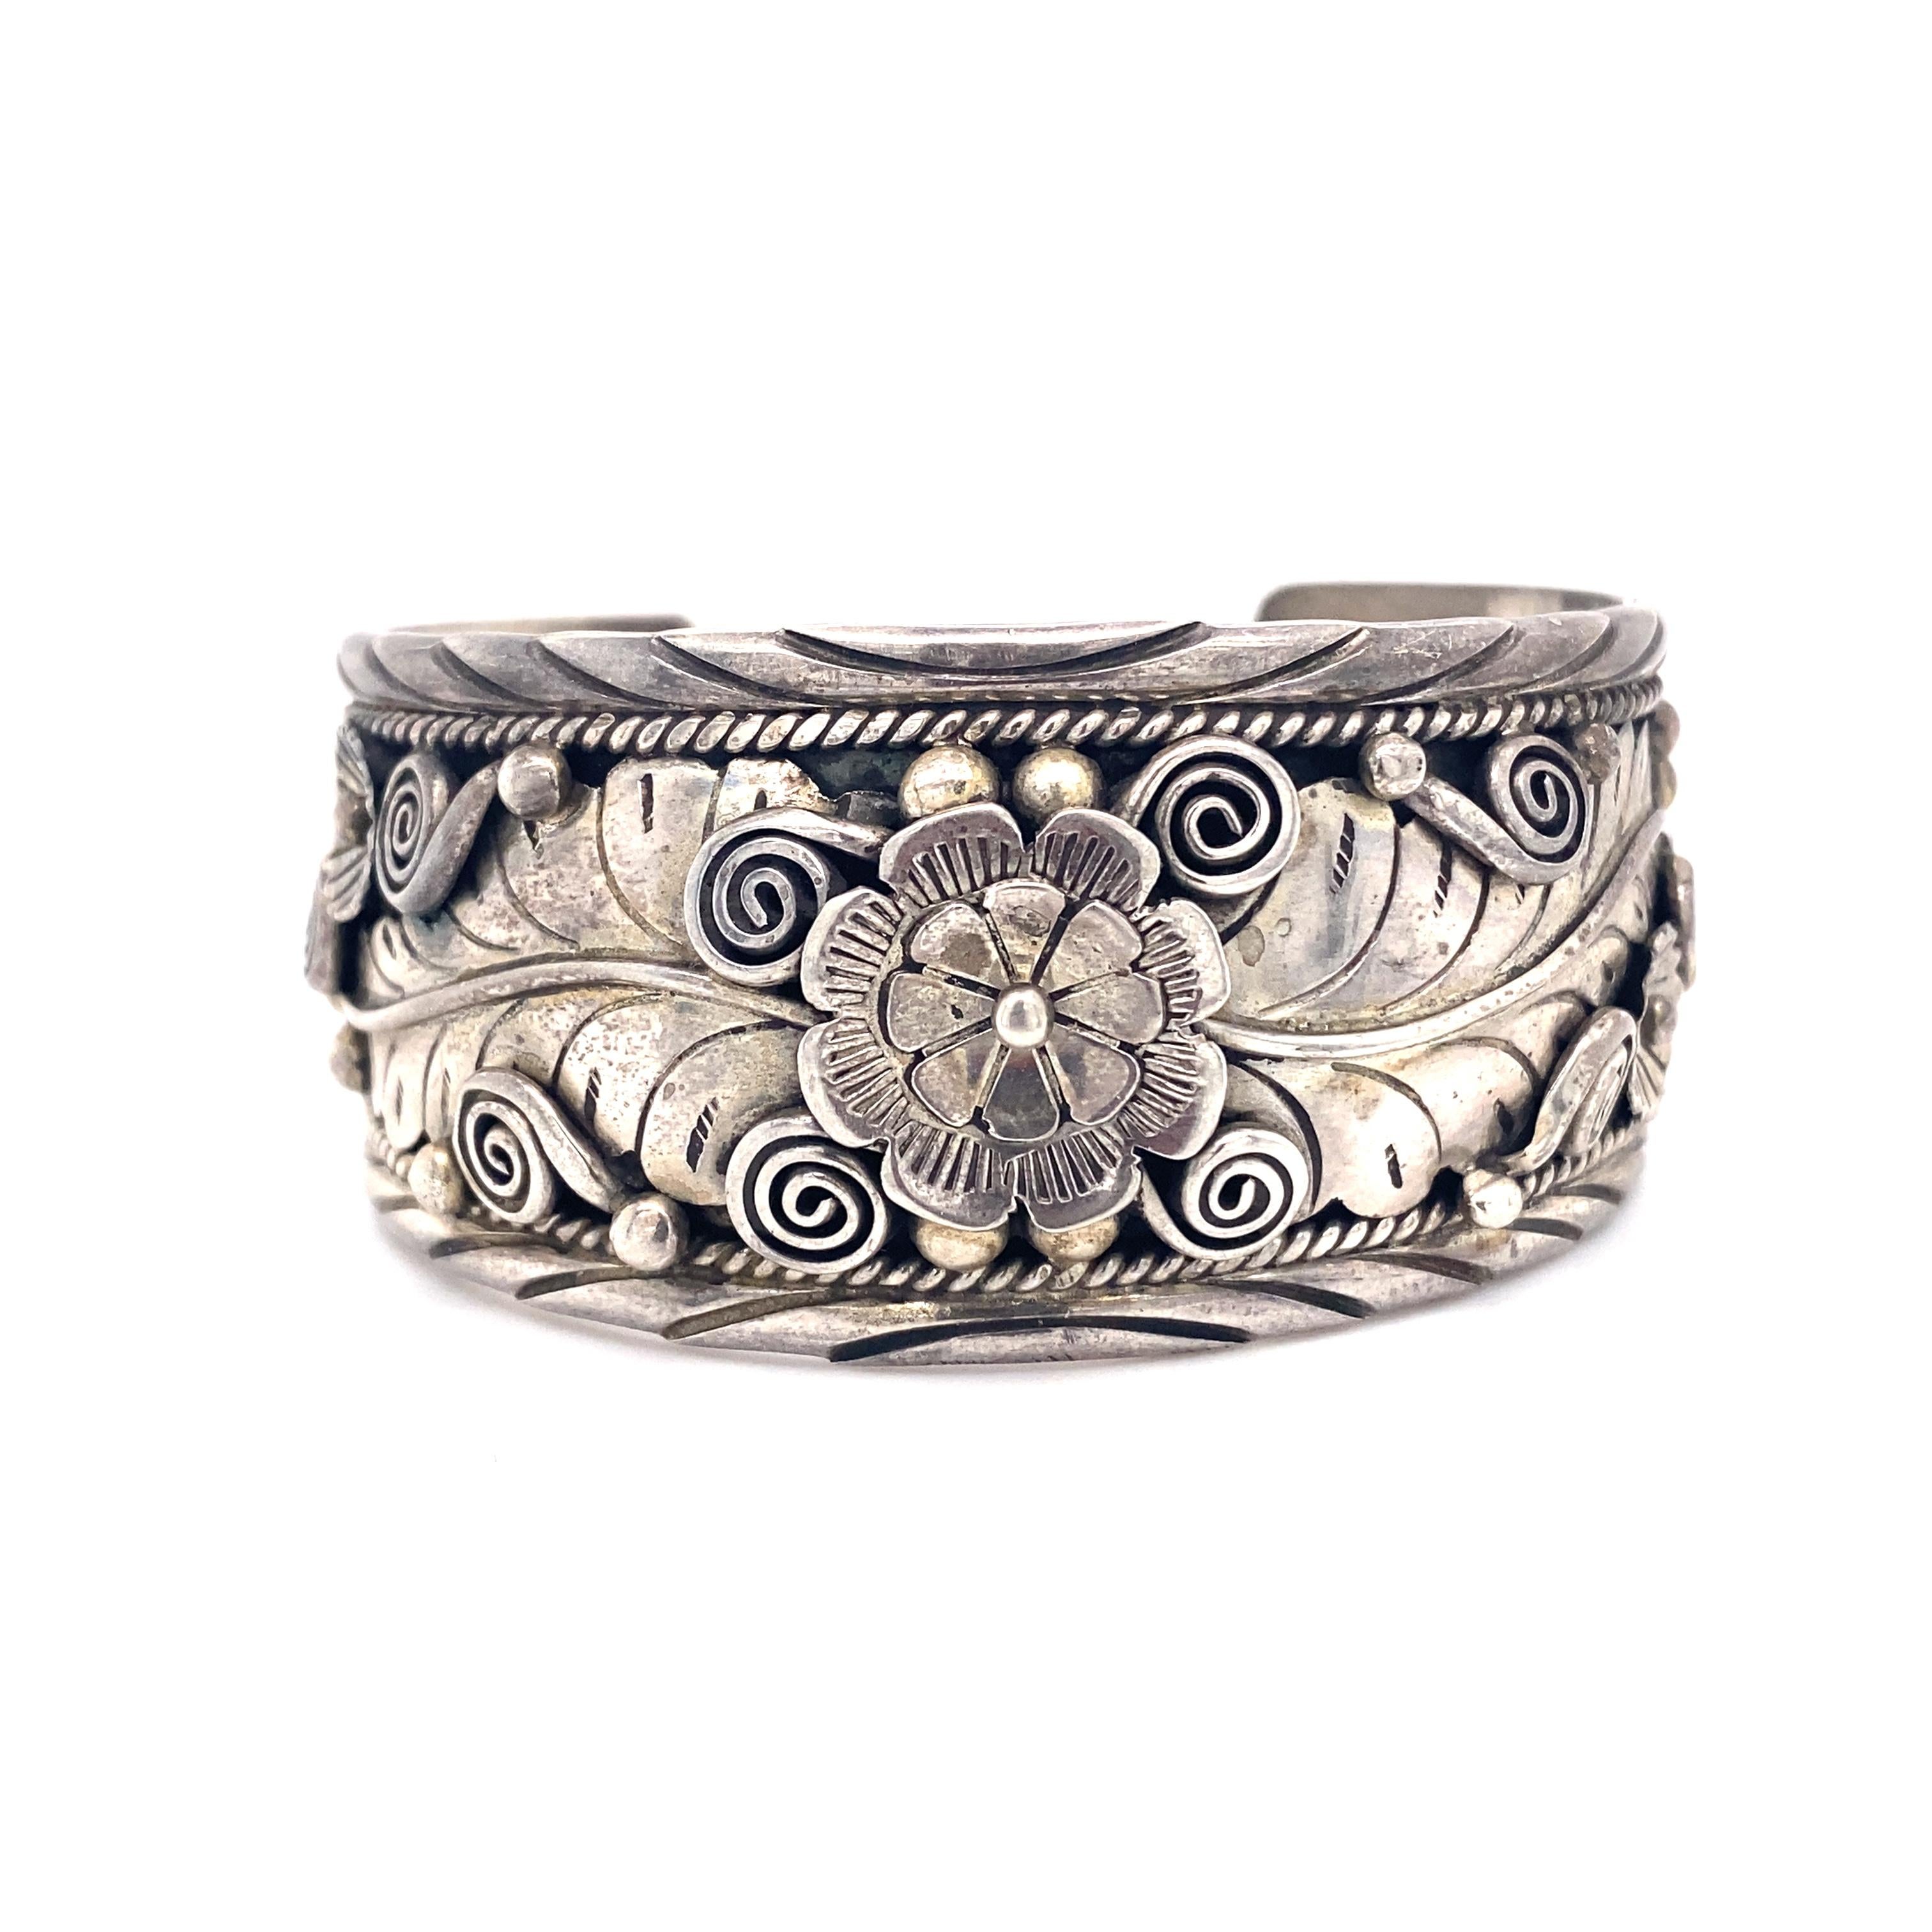 Retro Flower Design Cuff Bracelet in Sterling Silver, Marked Parlos